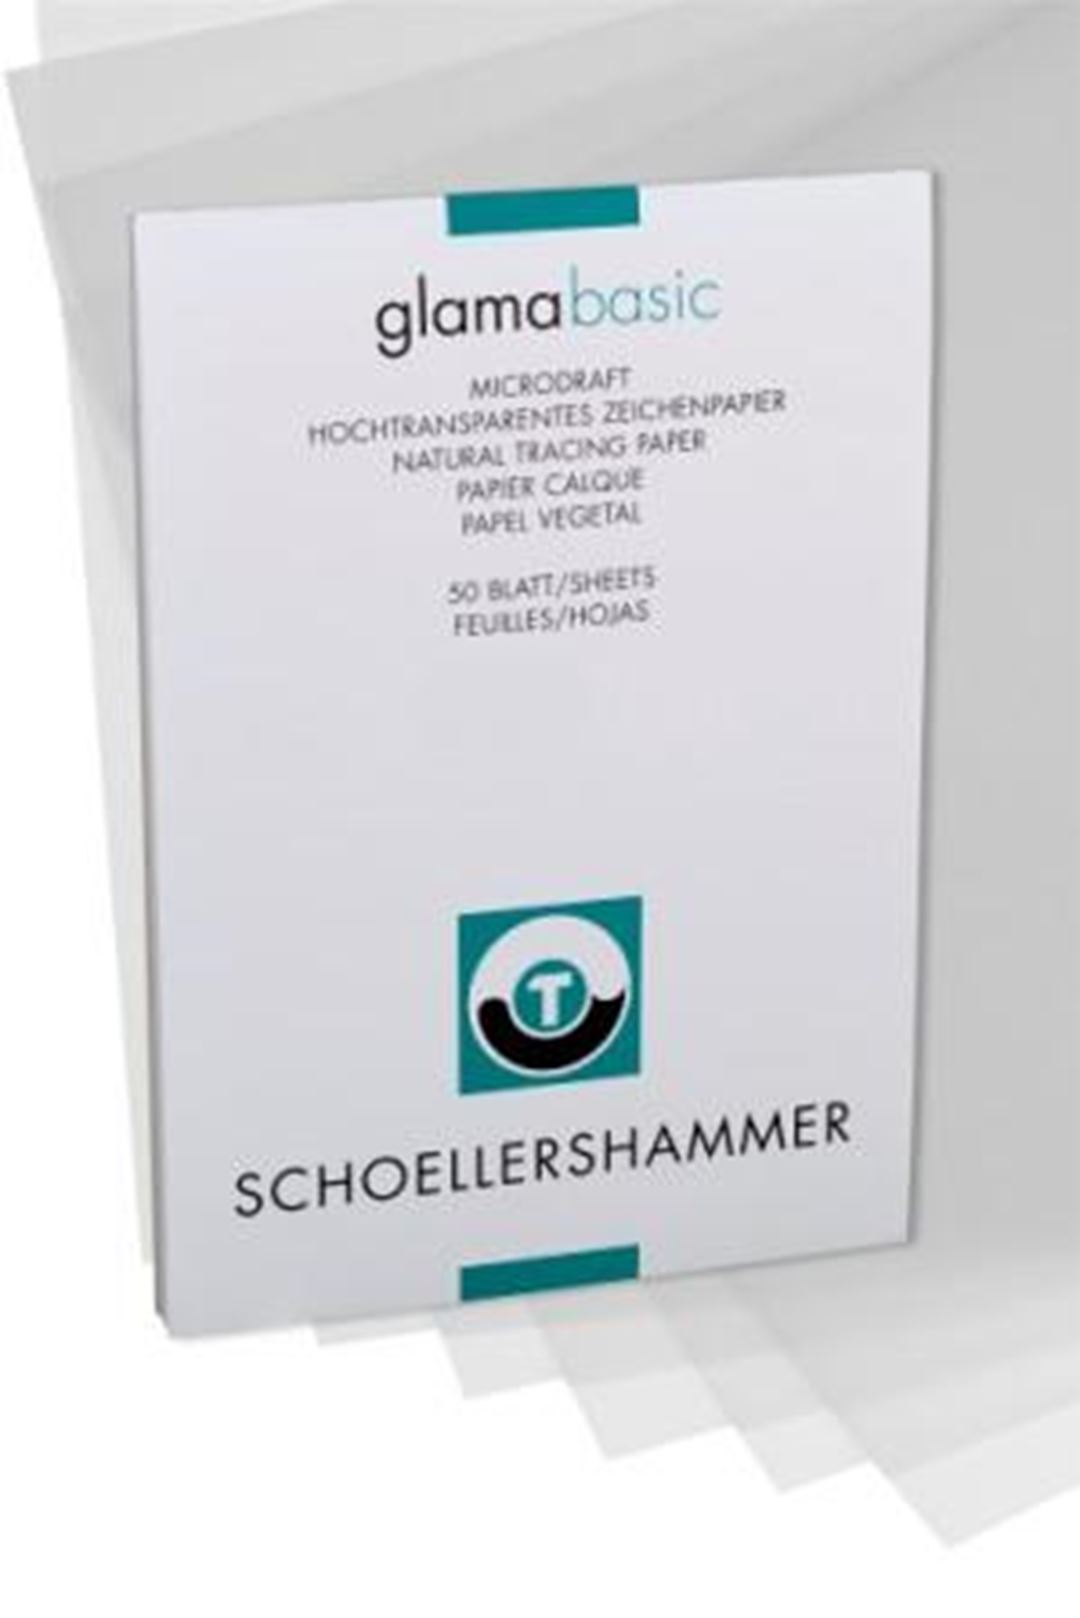 Transparantpapier Glama A4 90g/m2 bl.50 vel VF5003509